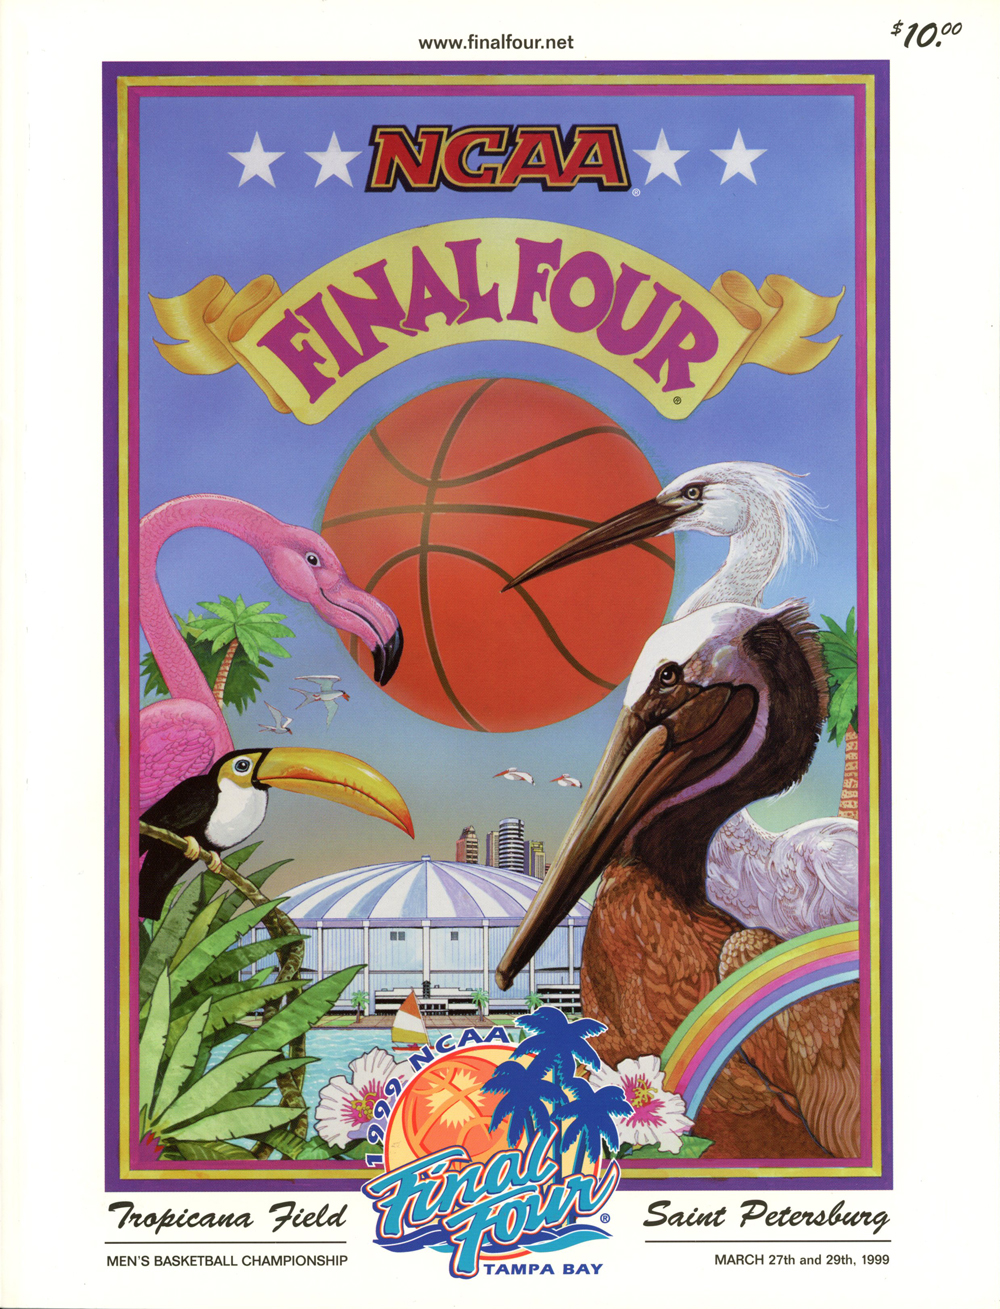 1999 NCAA Final Four Men's Basketball Championship Program